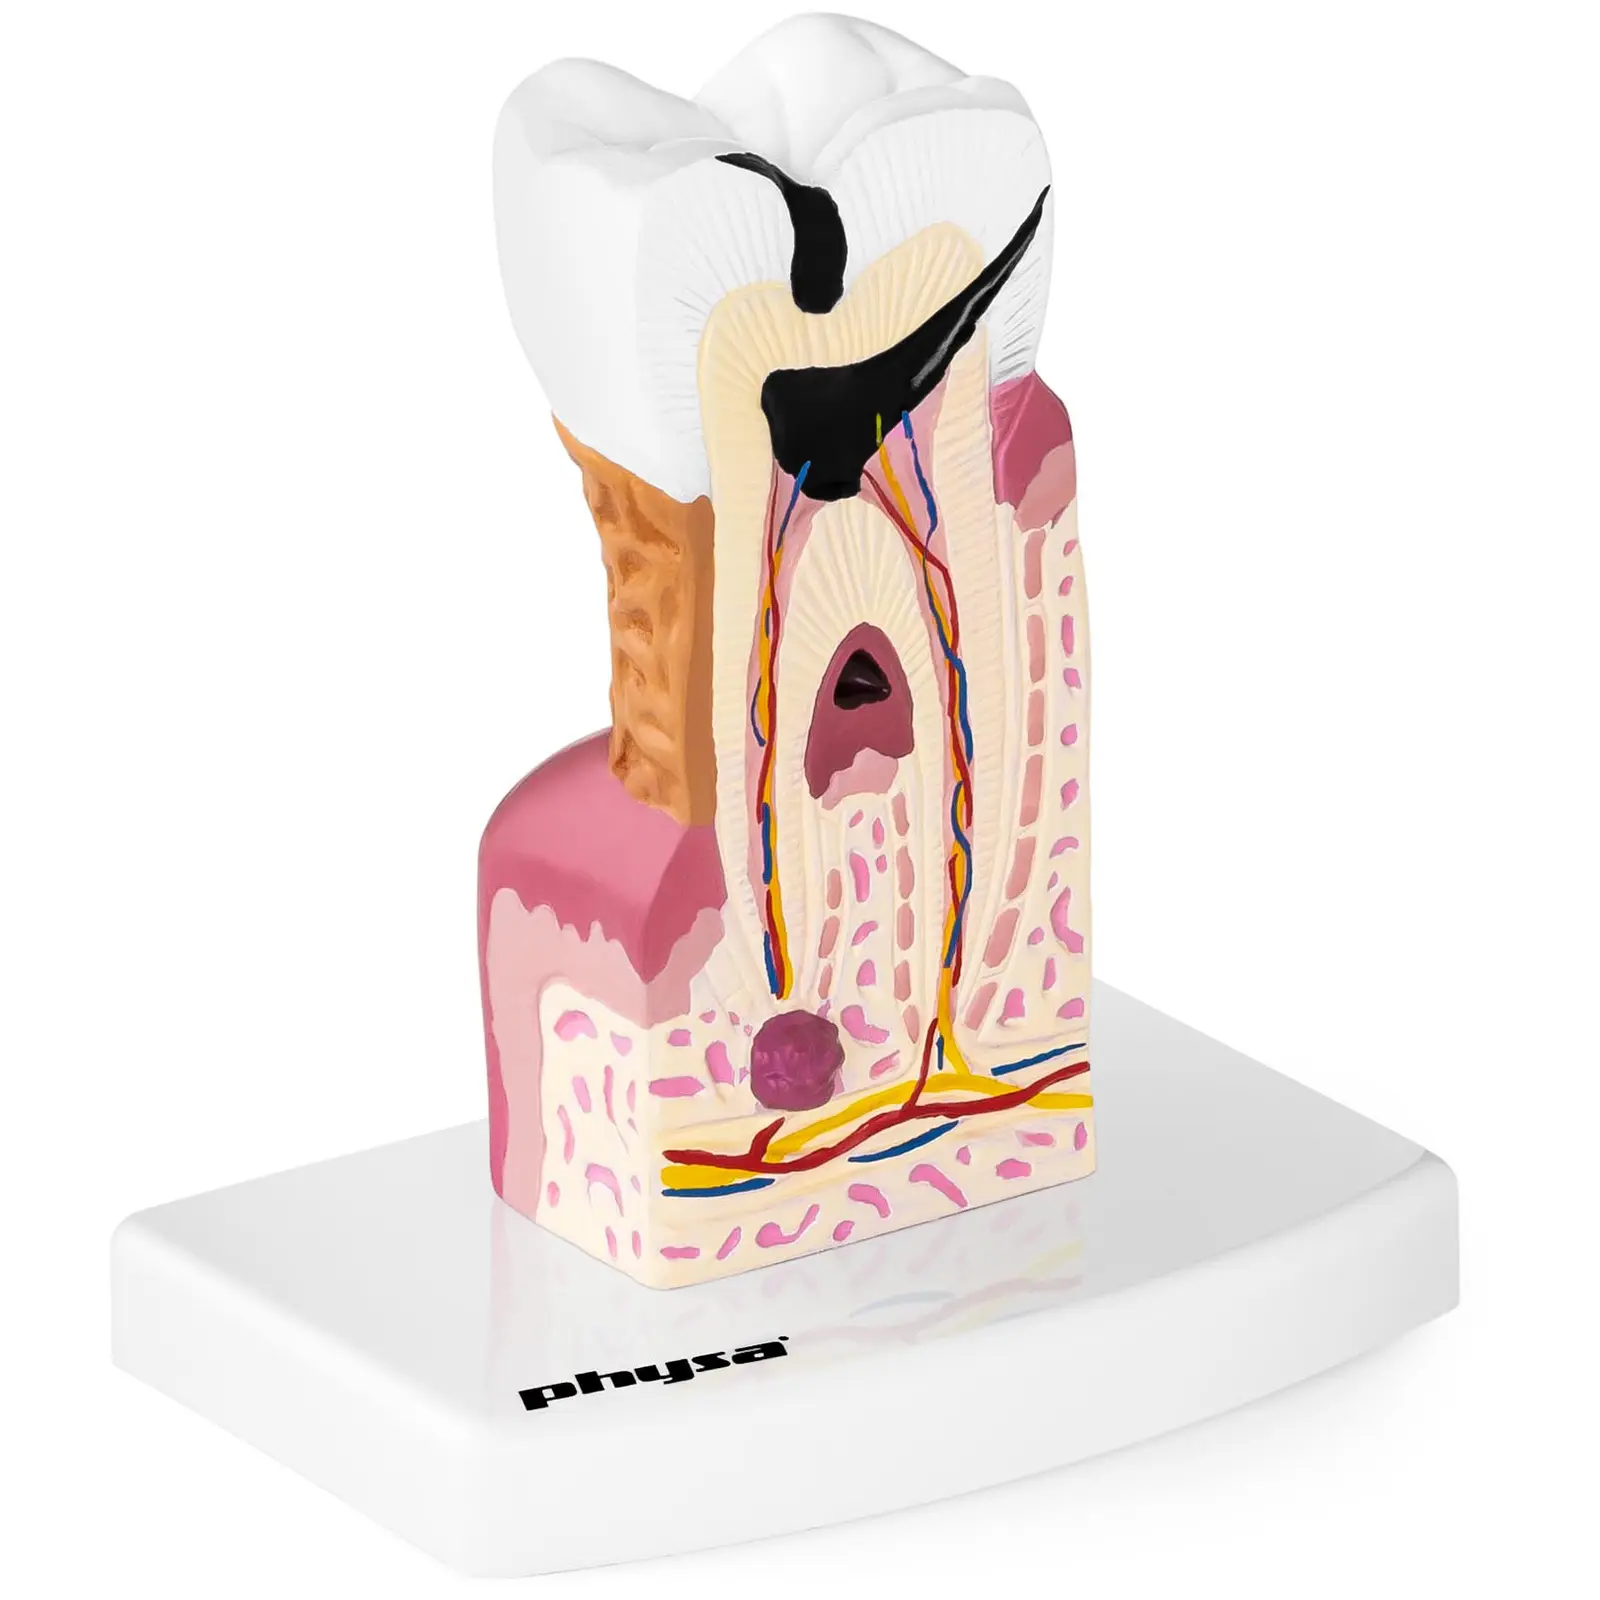 Tooth Model - Diseased Molar